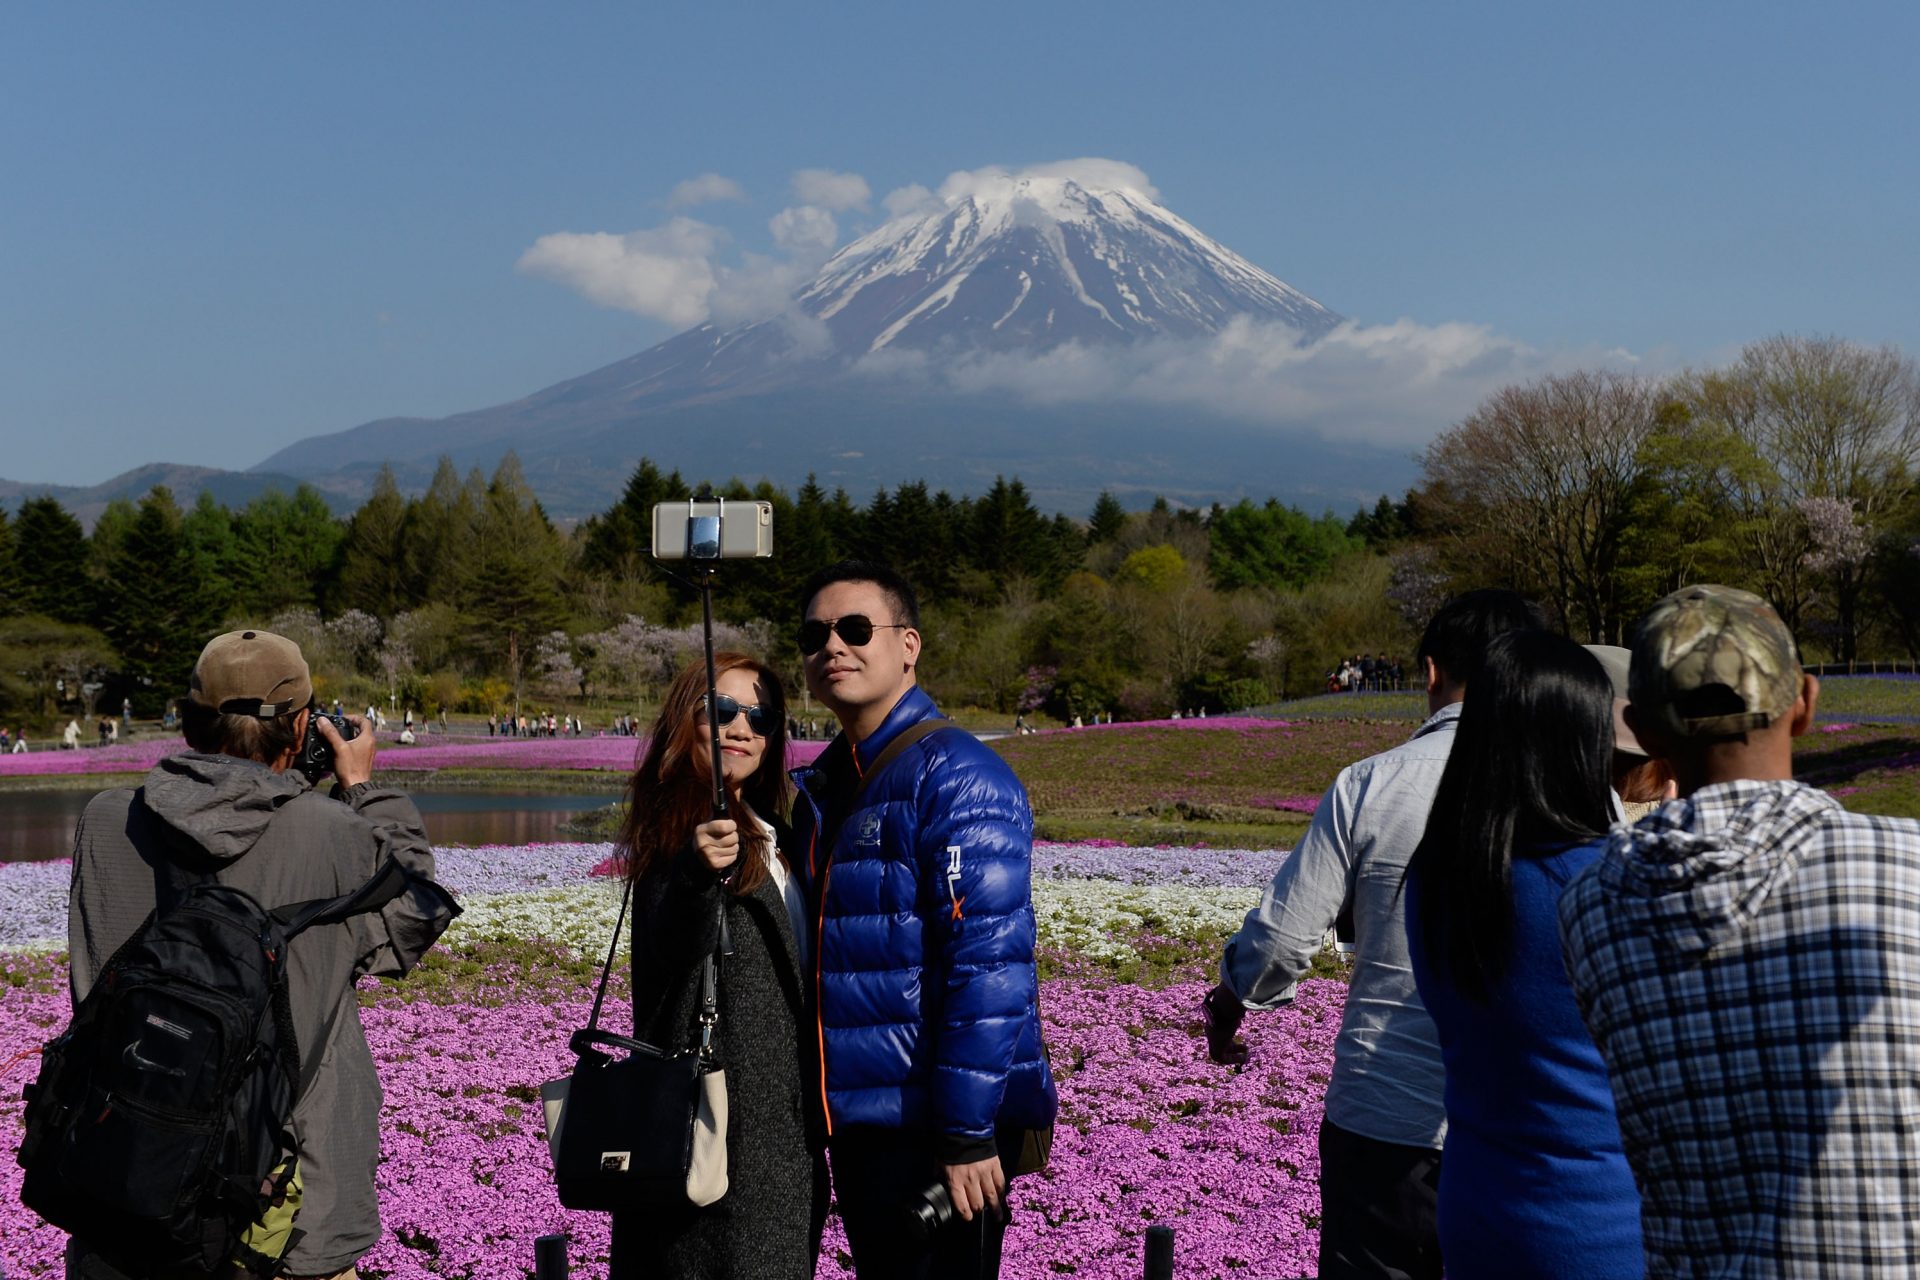 Por que esta cidade quer construir um muro para bloquear vista do Fuji?